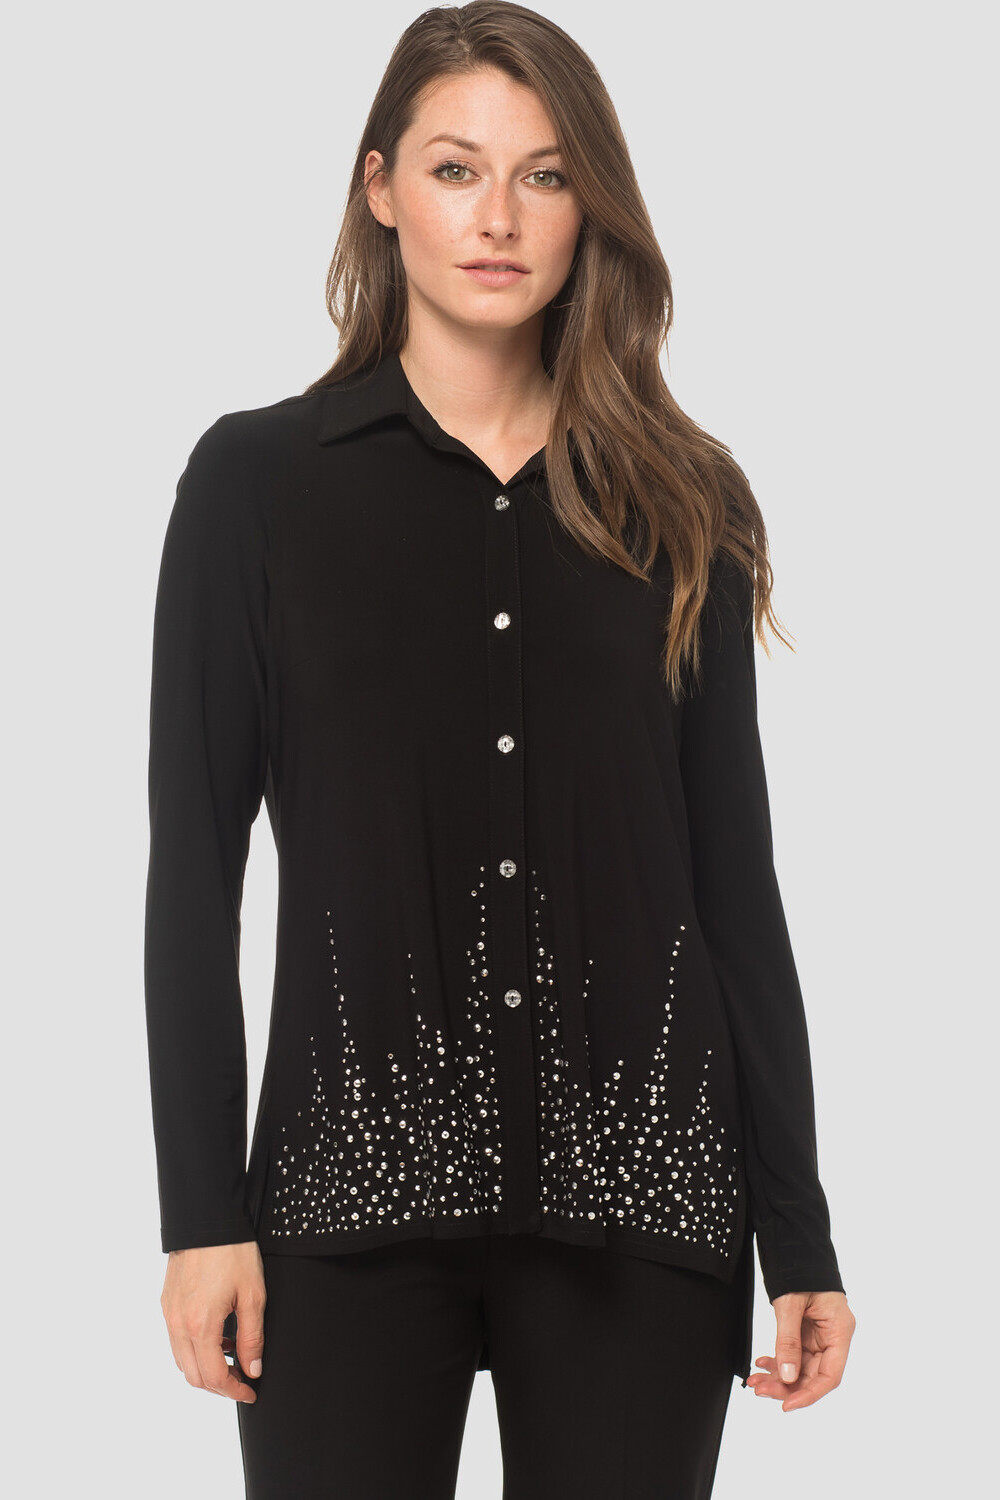 Joseph Ribkoff blouse style 183120X. Black